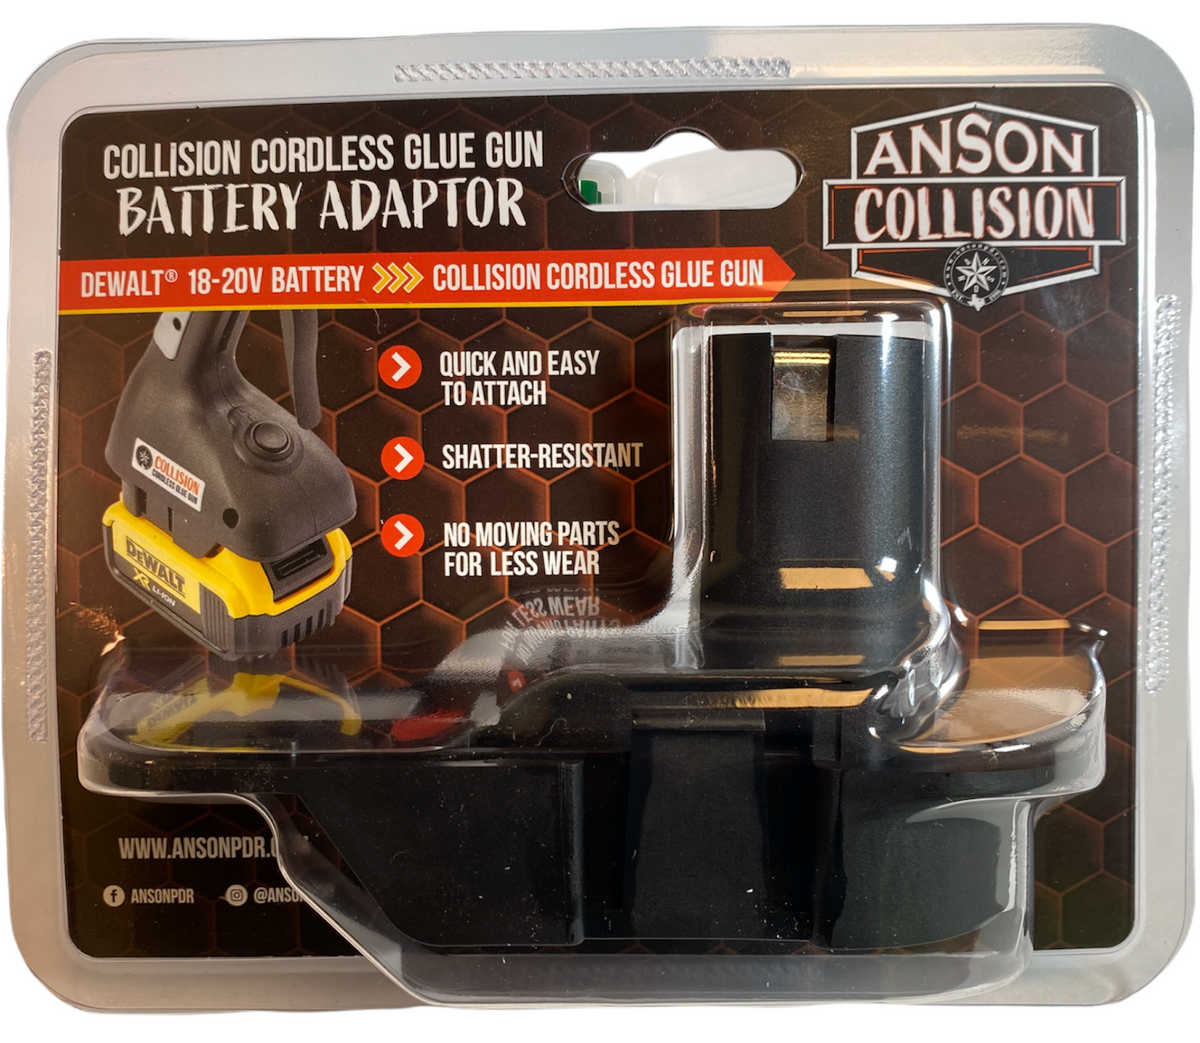 Anson Collision Ryobi to Dewalt glue gun battery Adapter – Anson PDR